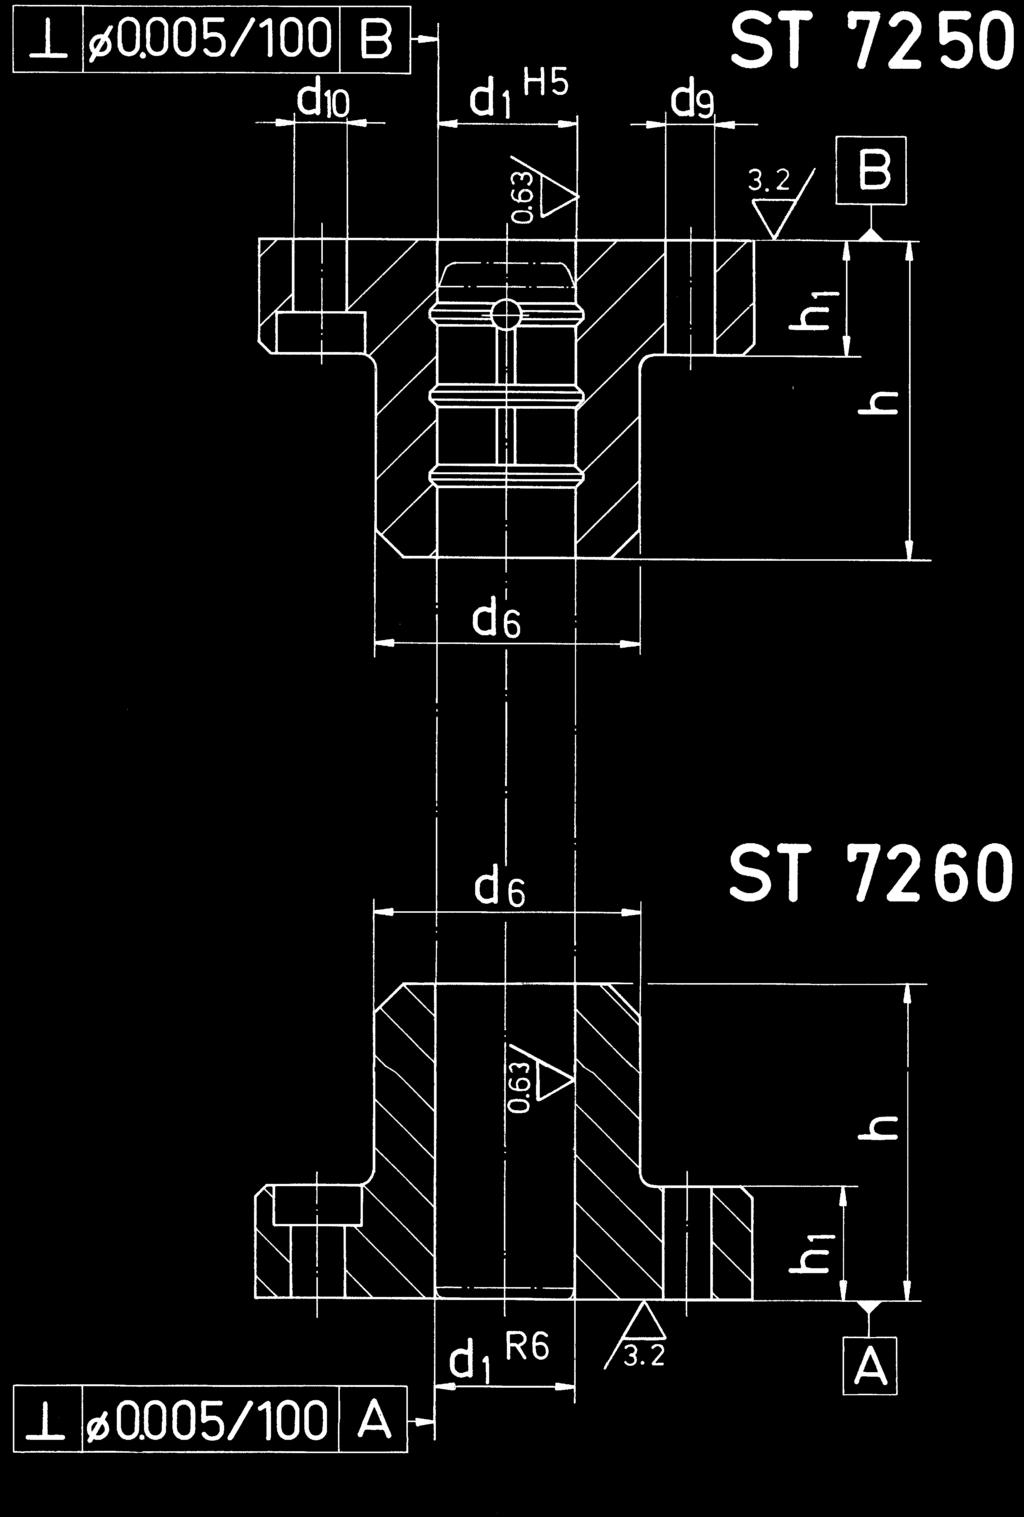 Guide and pillar bearings ST 72.